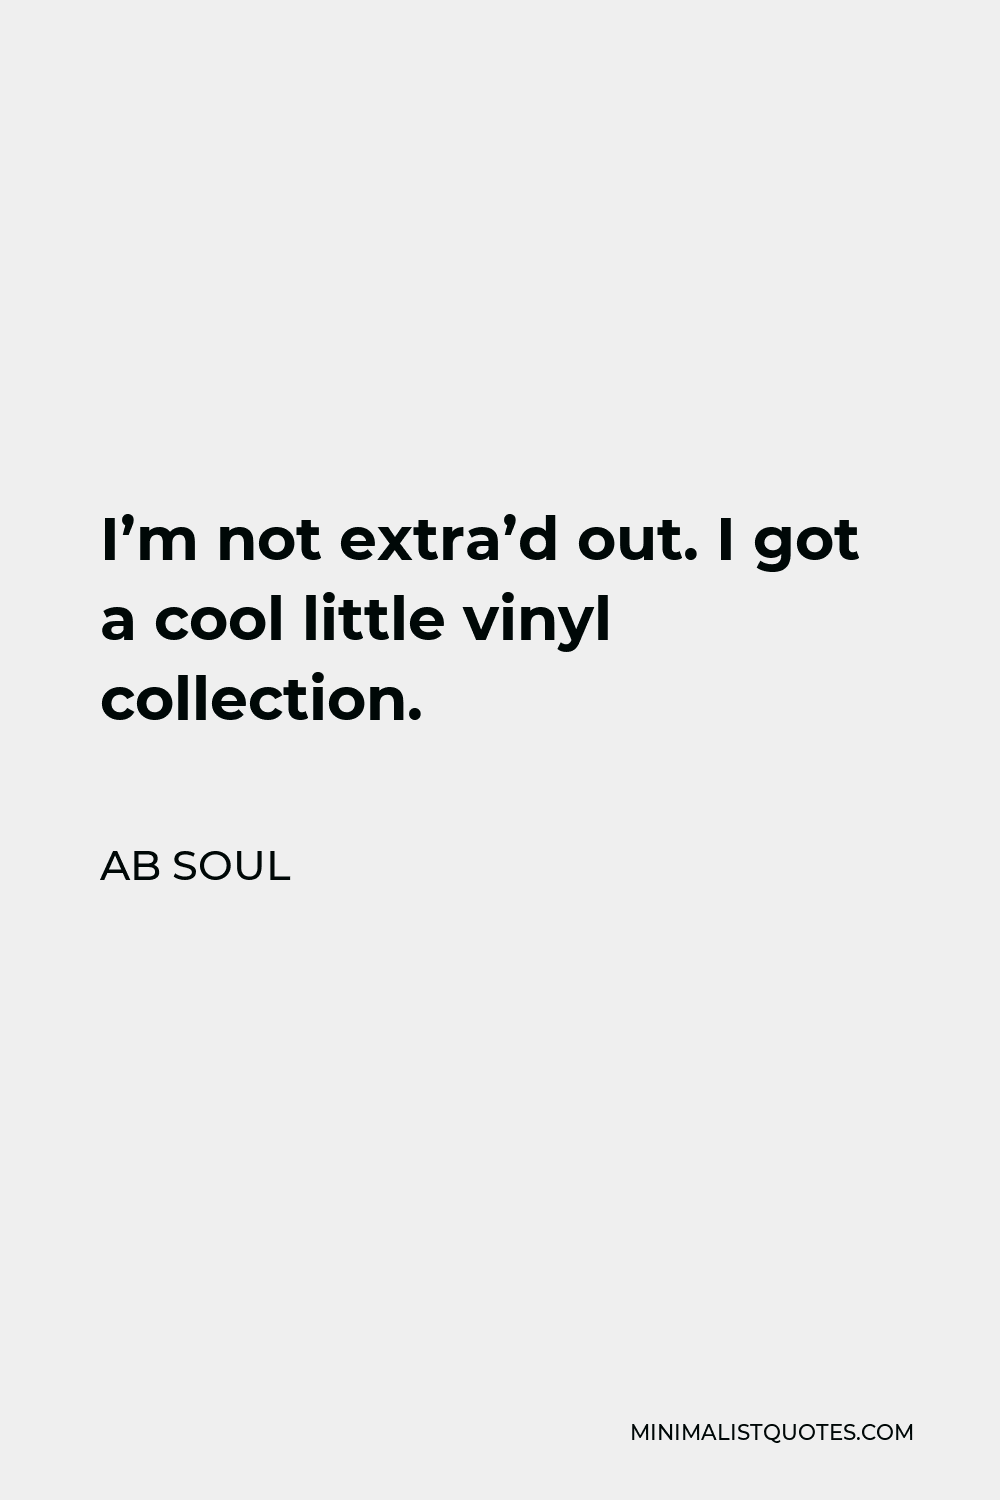 AB Soul Quote - I’m not extra’d out. I got a cool little vinyl collection.